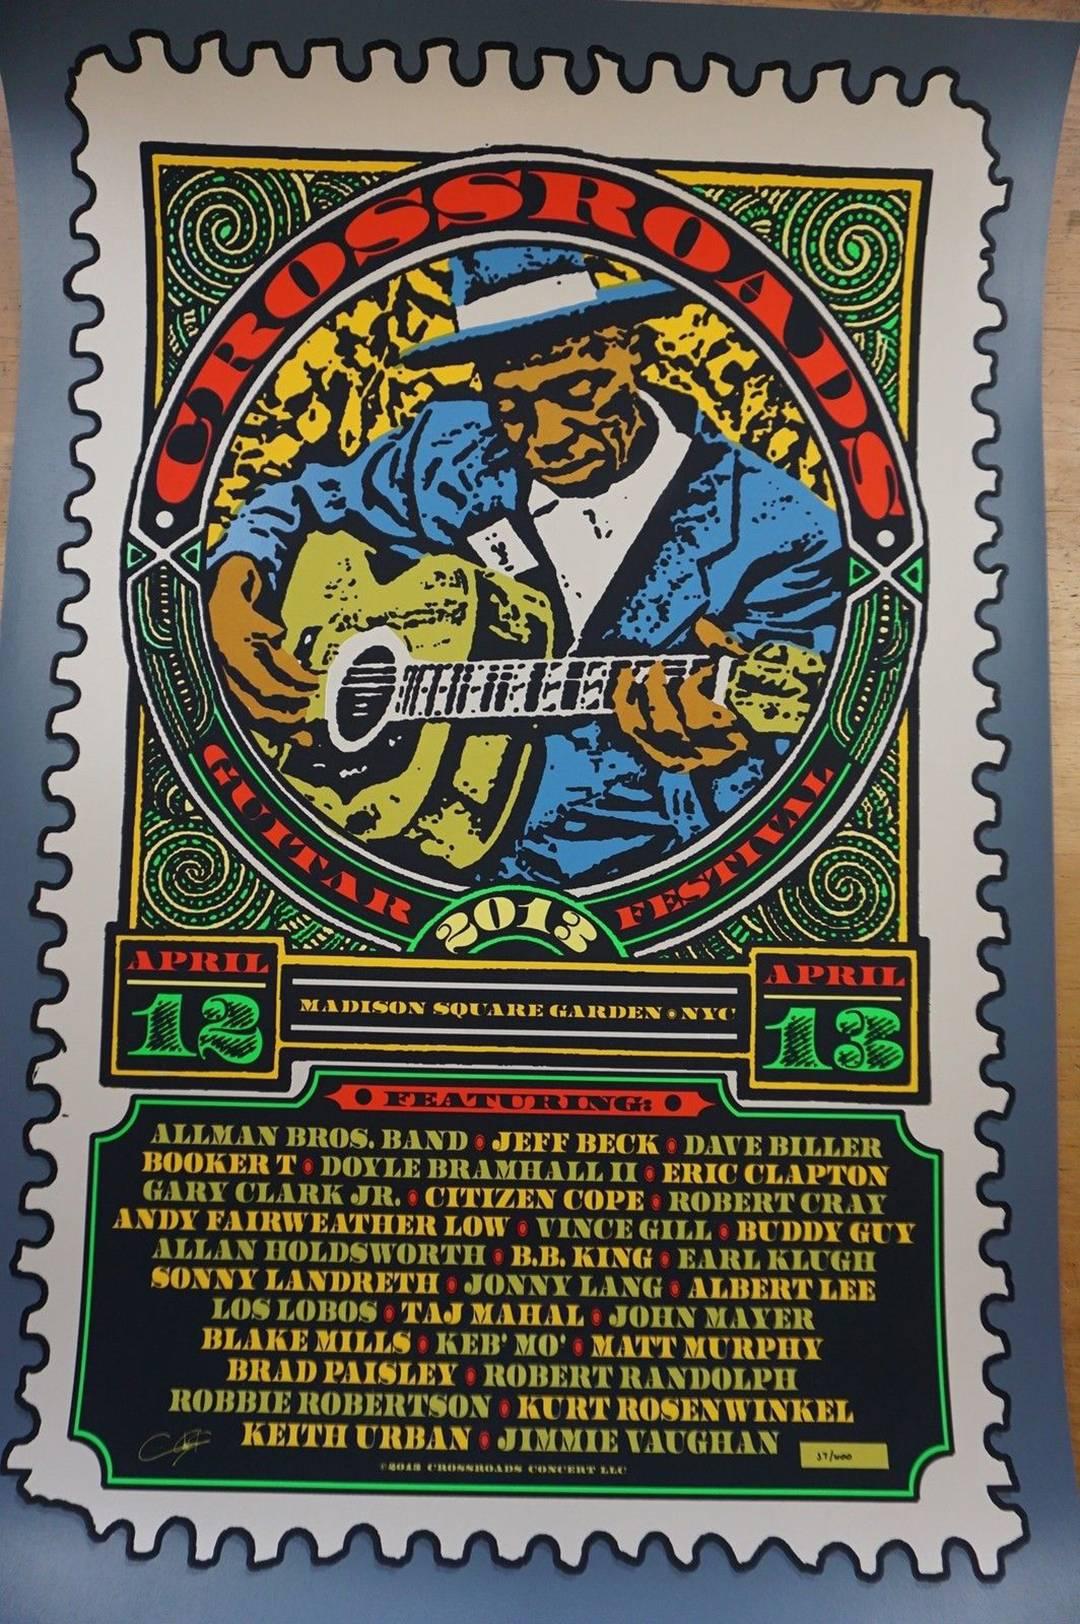  Original Crossroads Guitar Festival Poster – 2013, Ron Donovan & Chuck Sperry - Mixed Media Art by Ron Donovan and Chuck Sperry